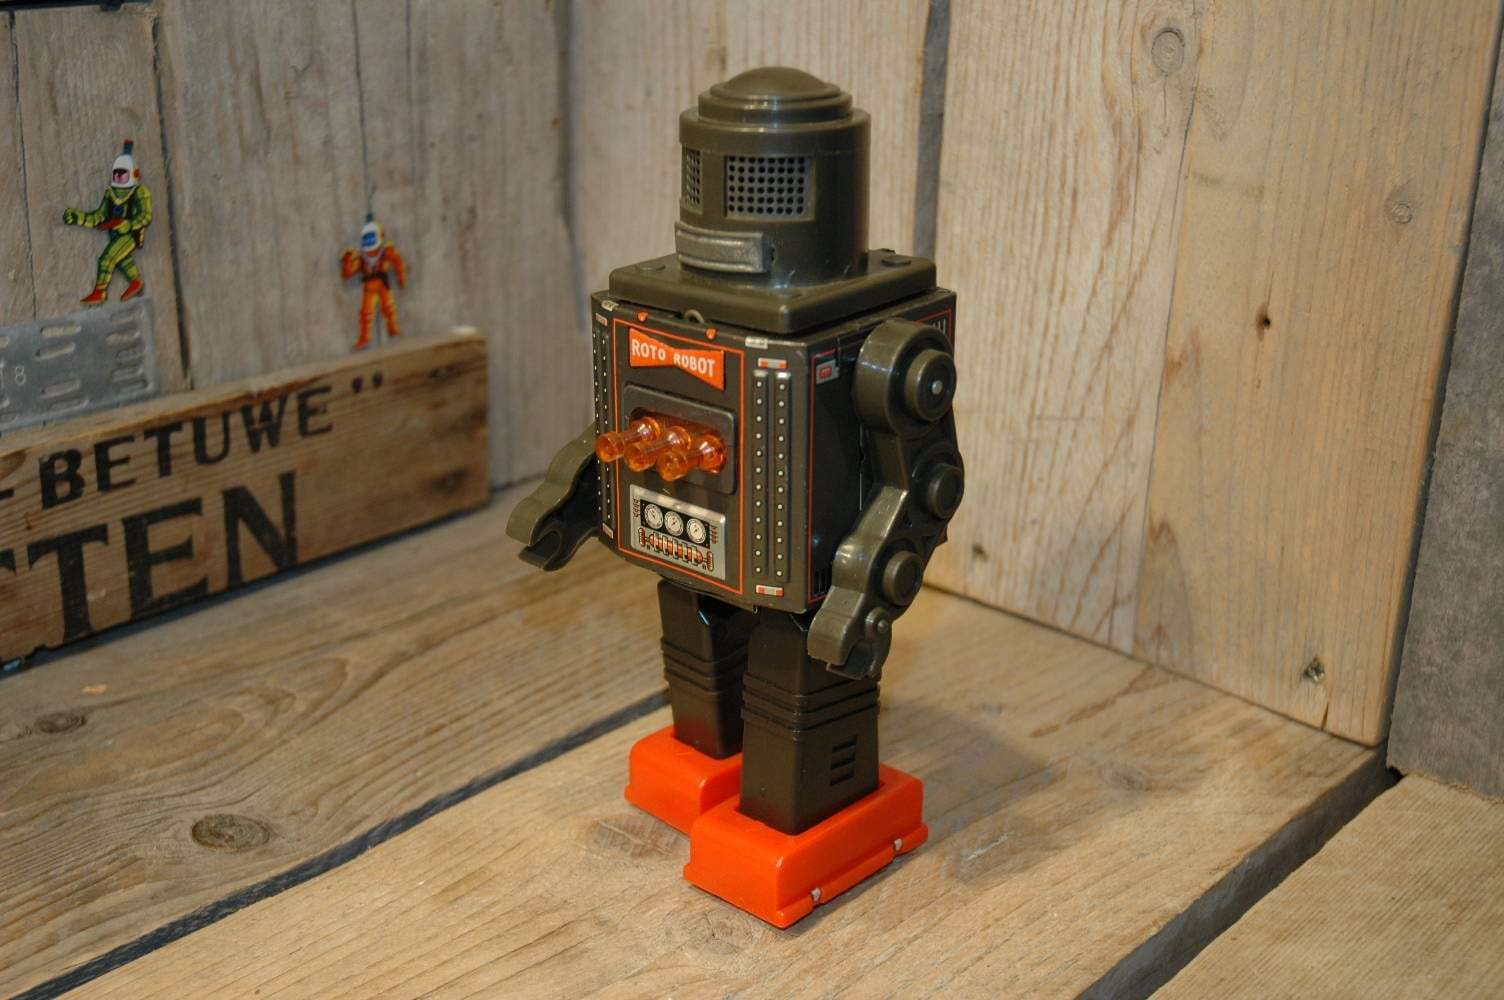 Horikawa - Roto Robot